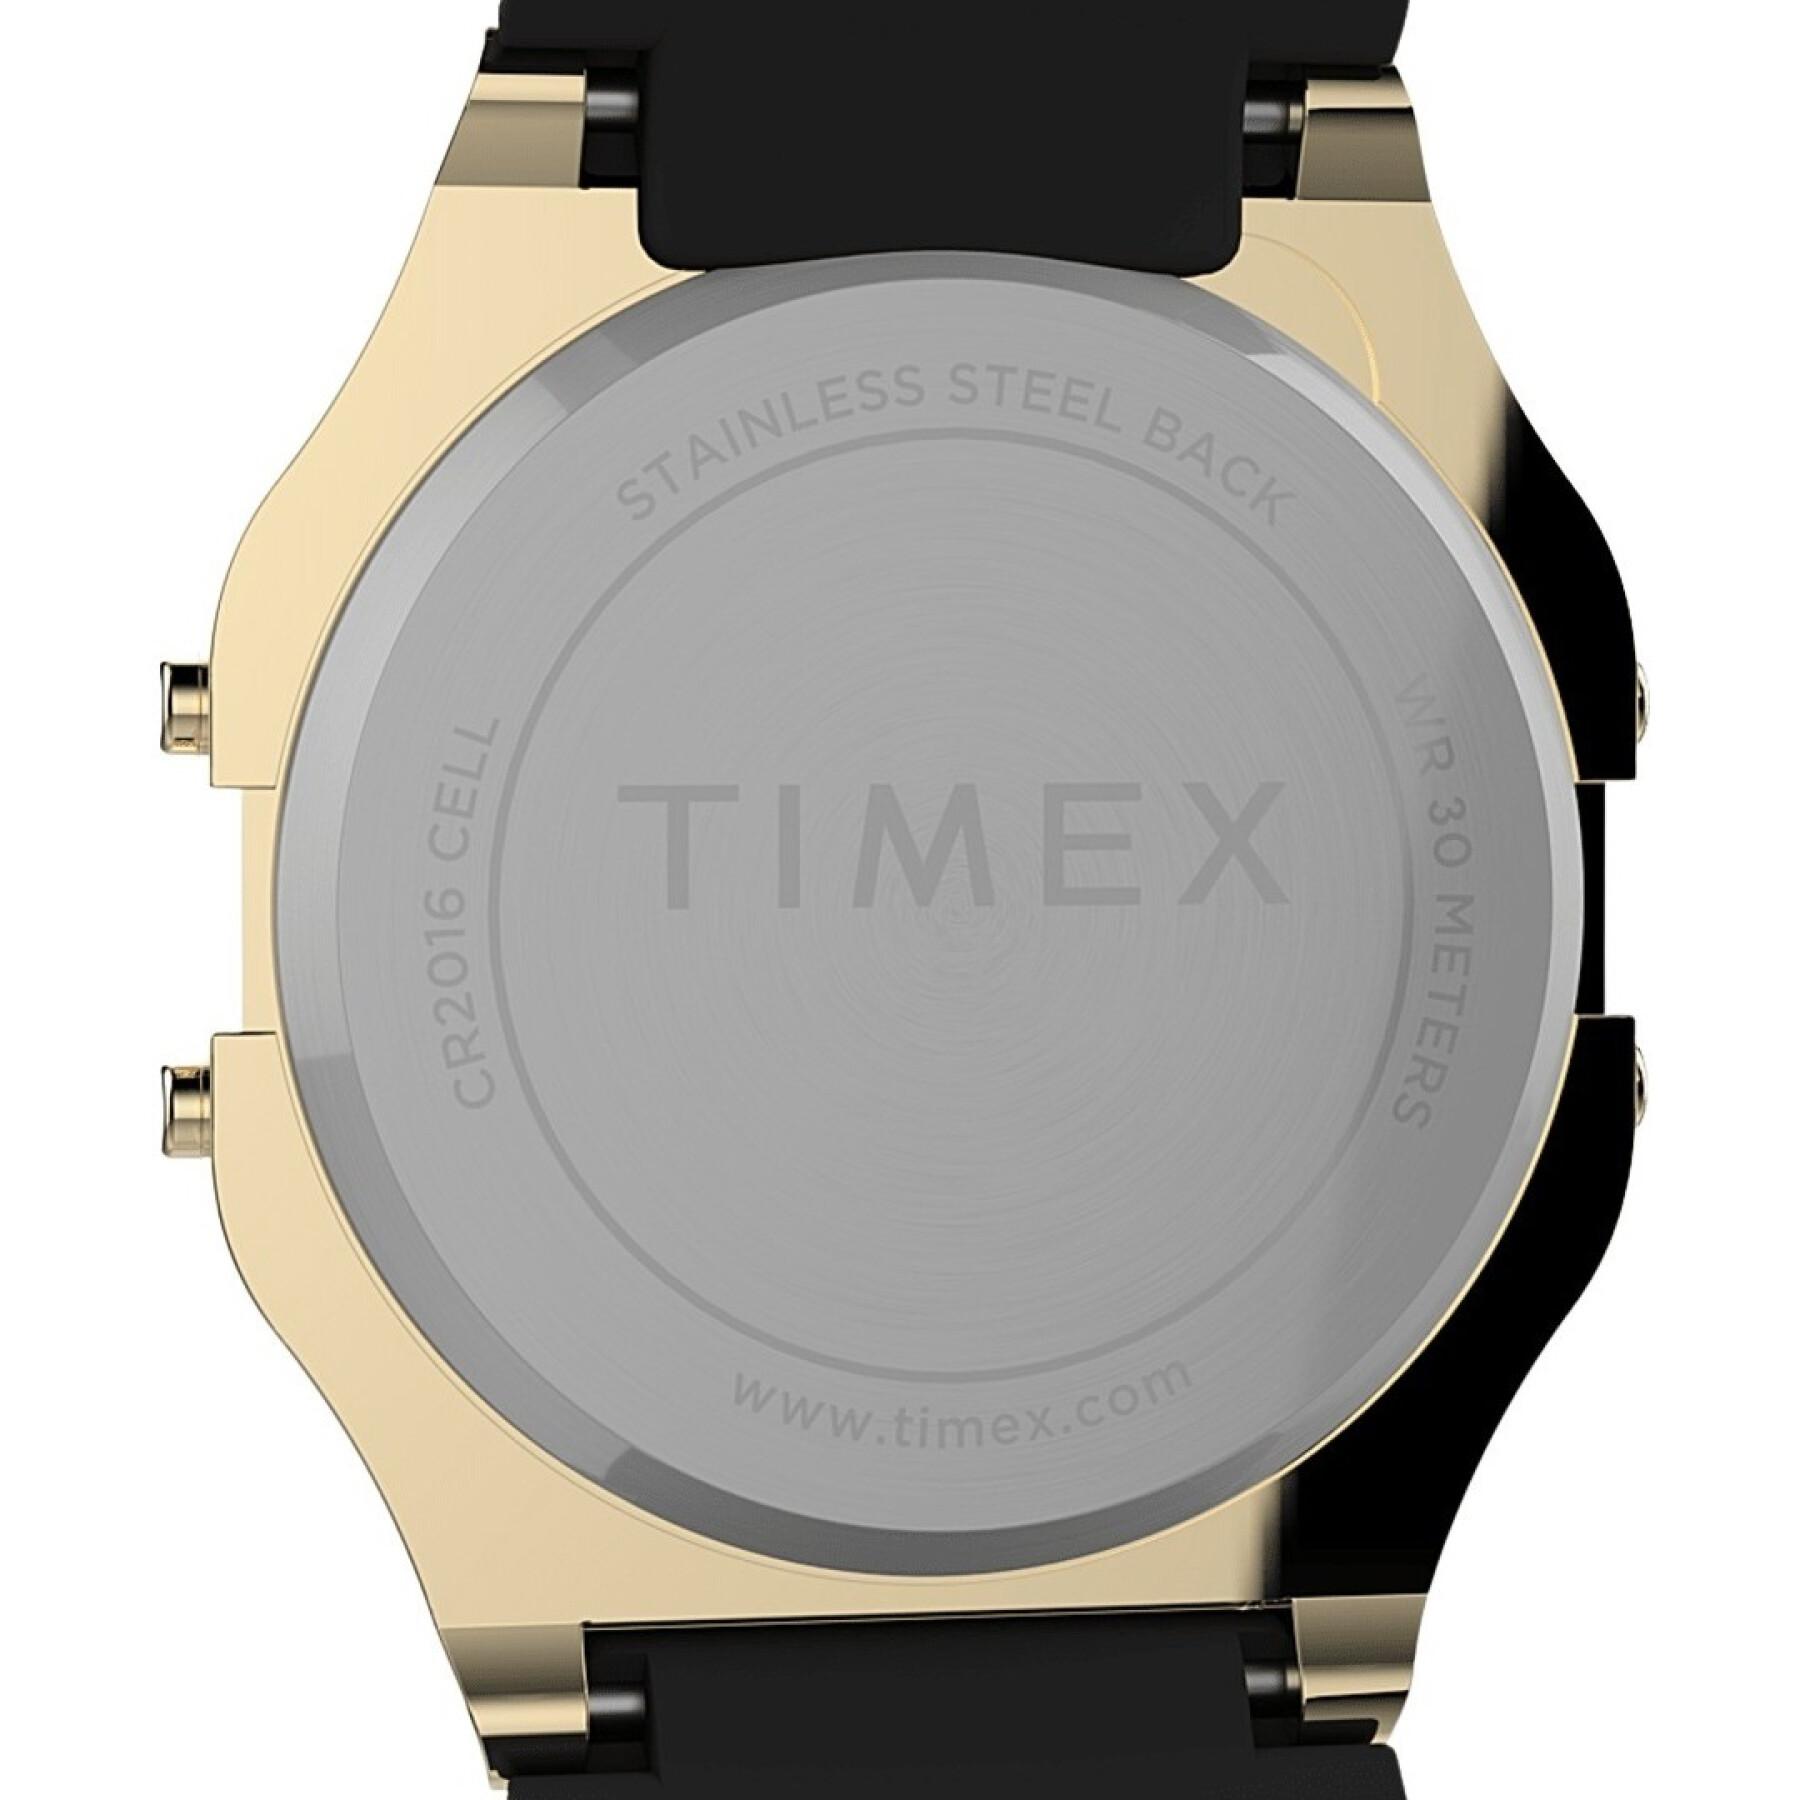 Uhr Timex 80 Resin Strap